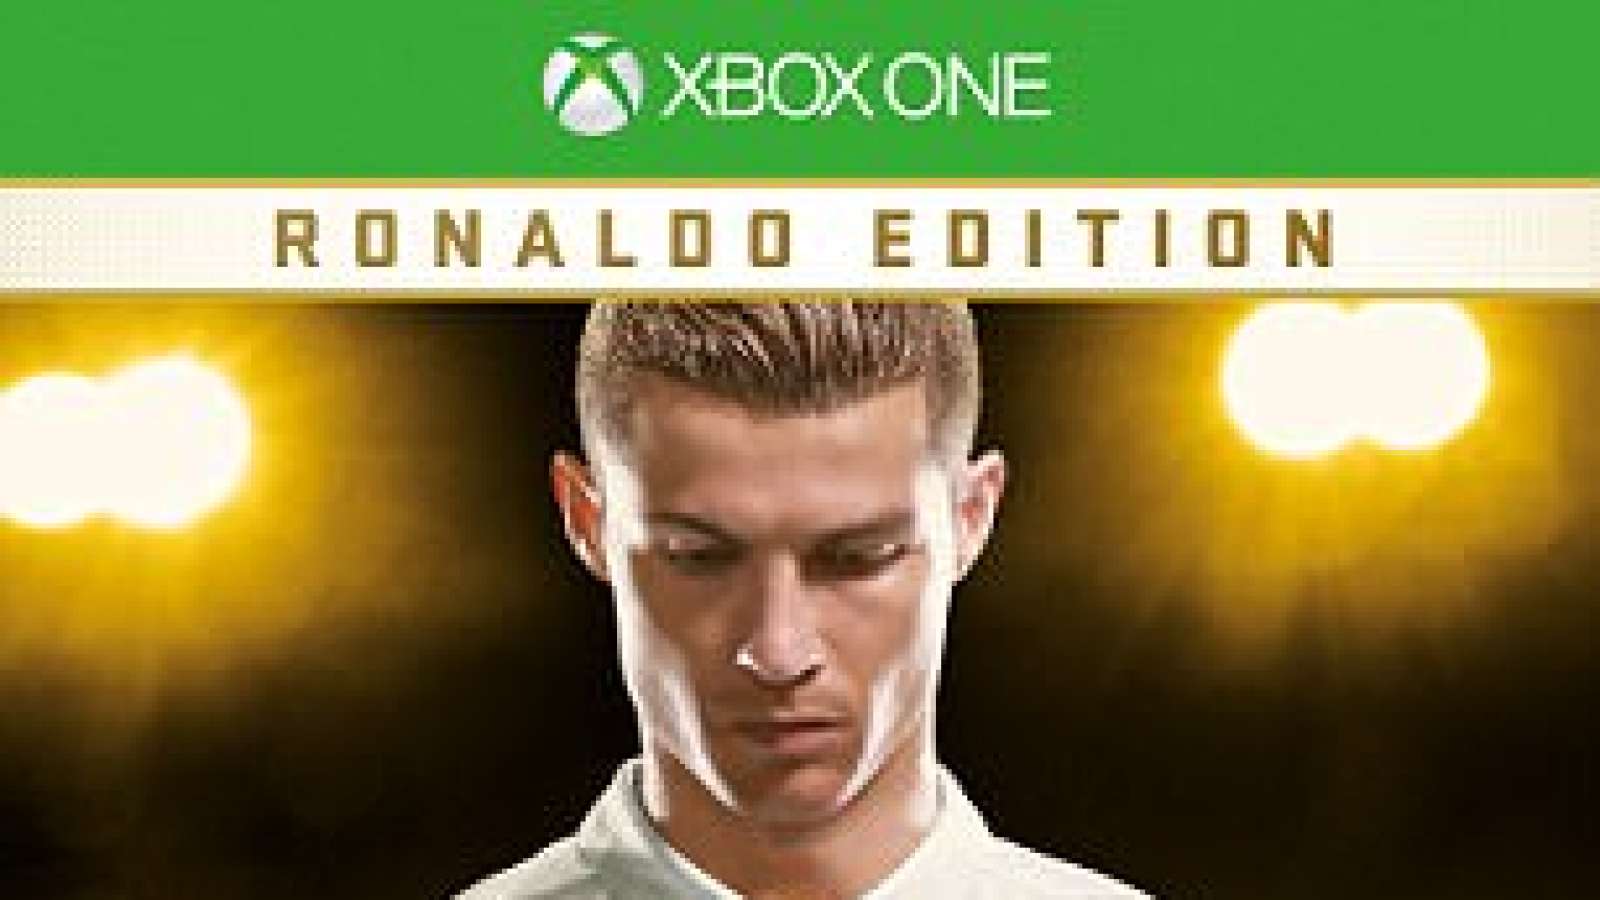 Cristiano Ronaldo: Real Madrid forward is the cover FIFA 18